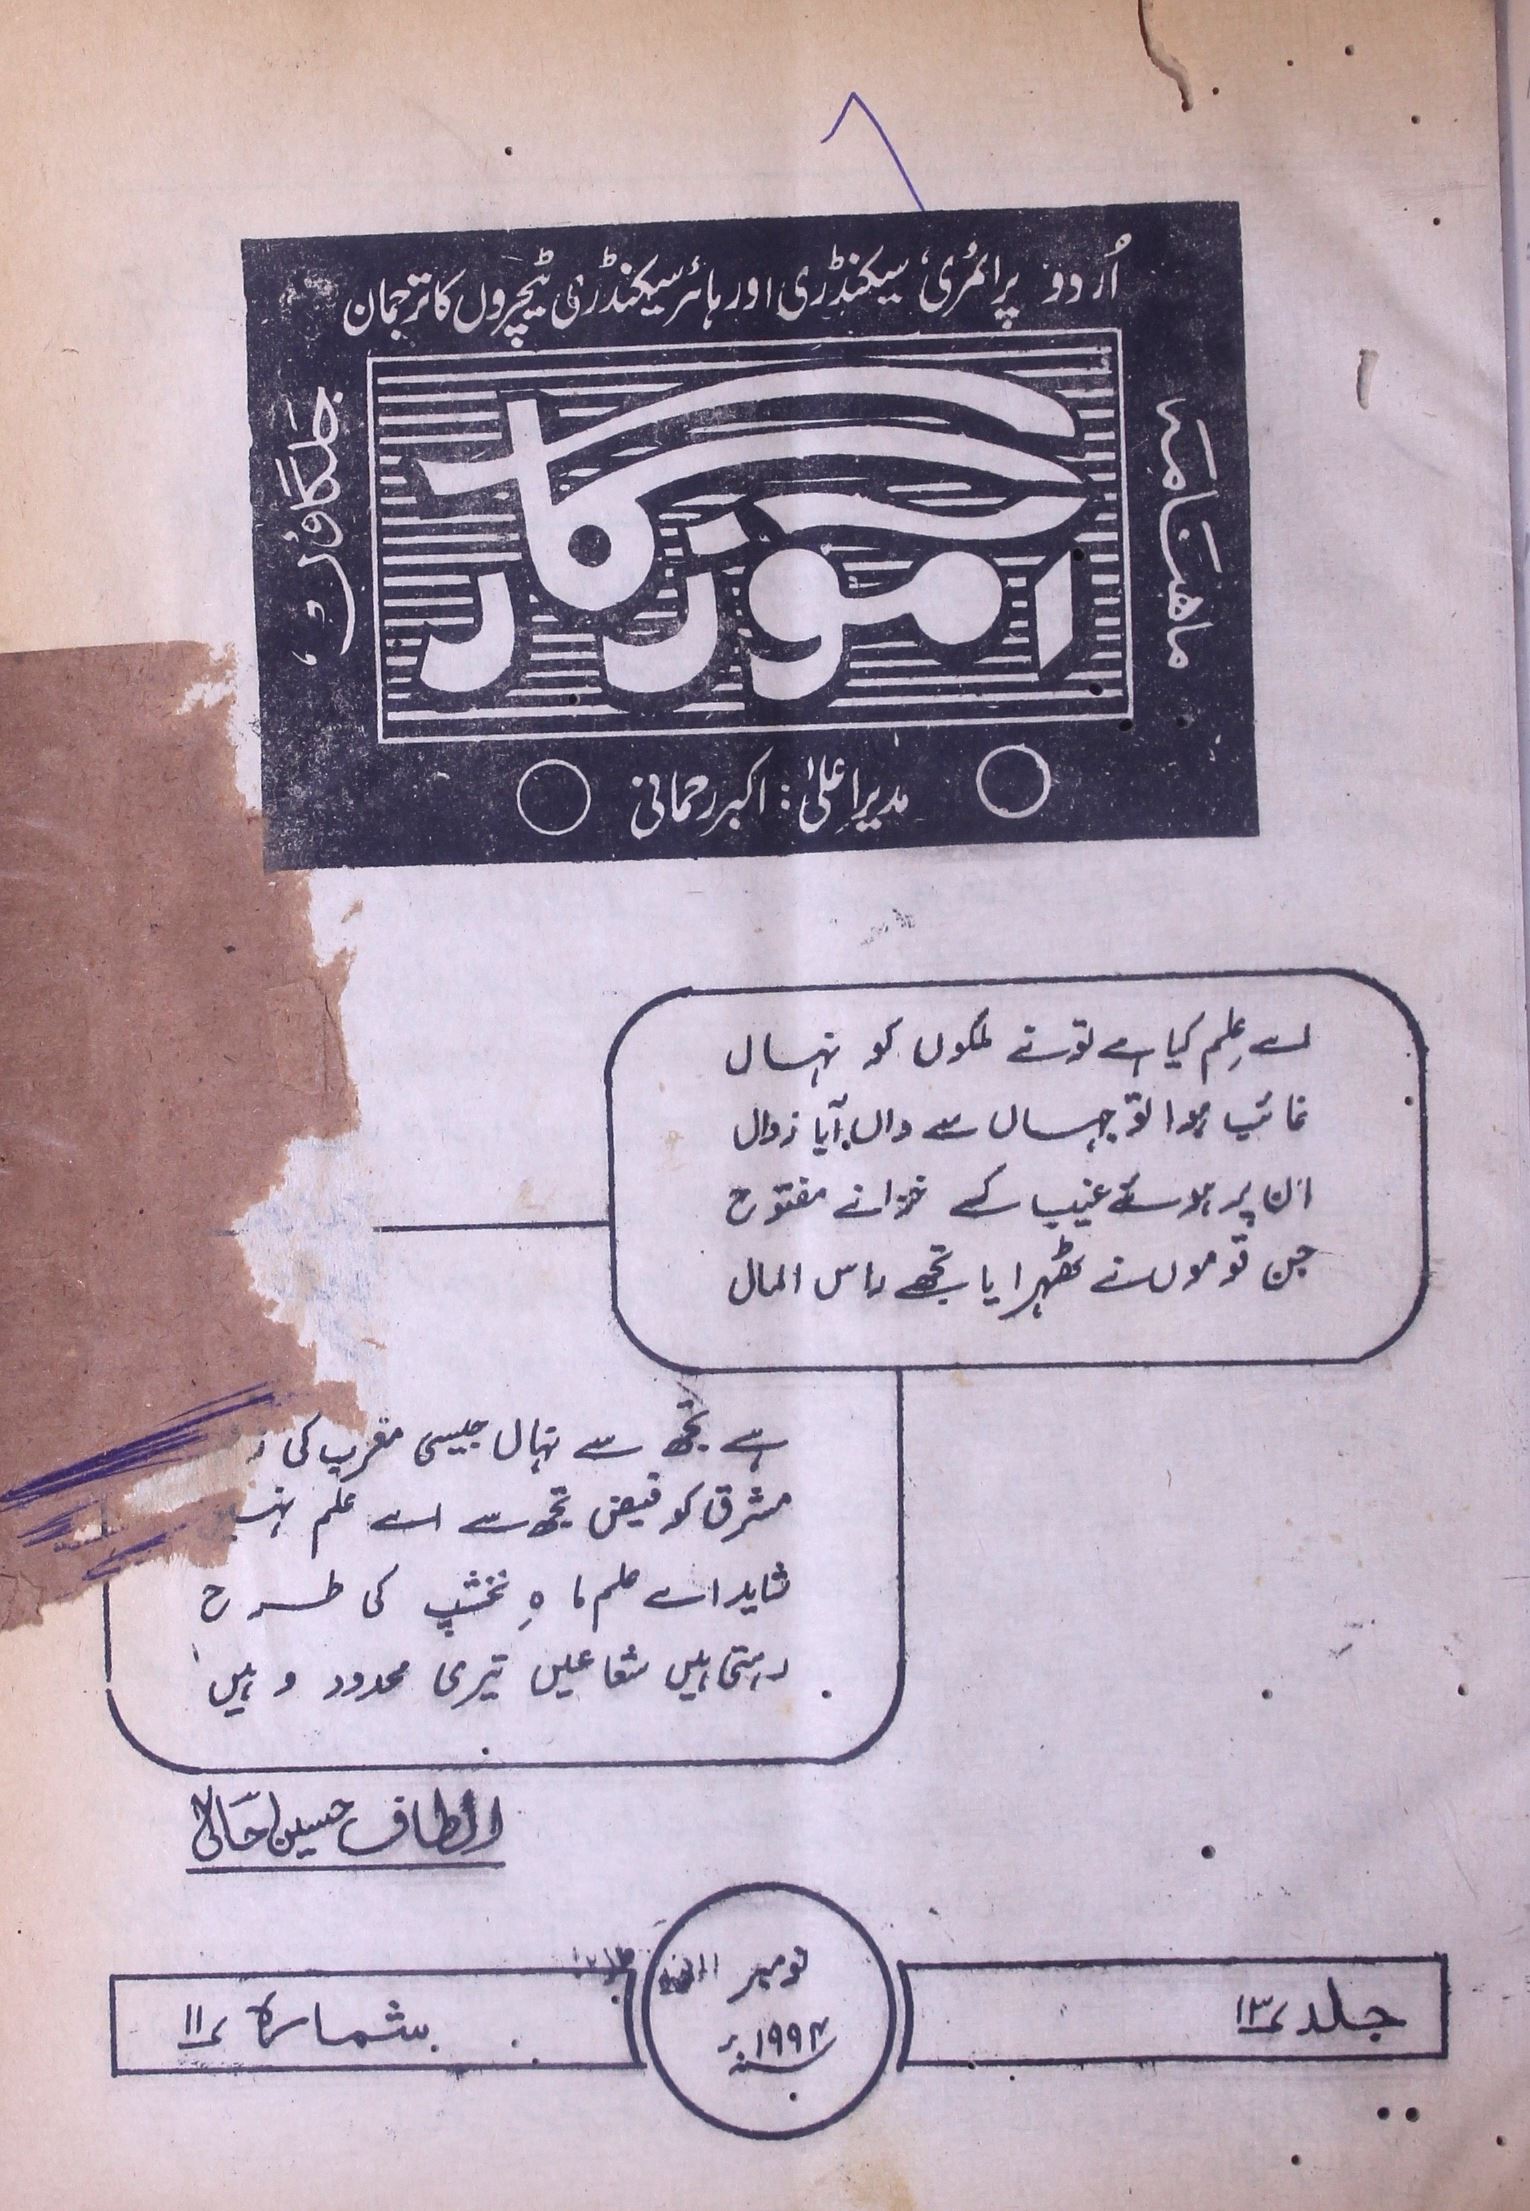 Aamozgar Jild 13 Sh. 11 Nov. 1994